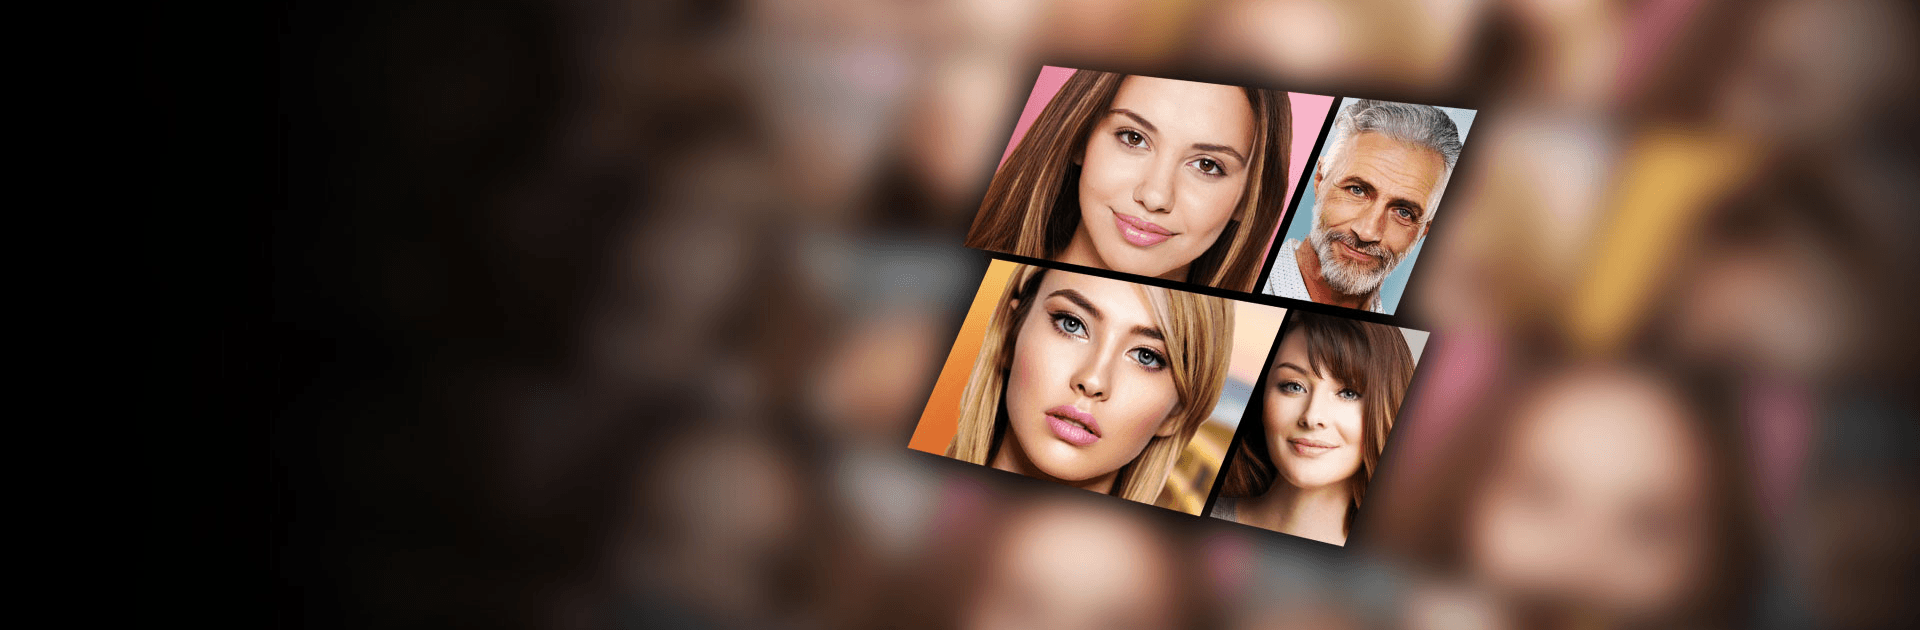 FaceApp – Face Editor, Makeover & Beauty App